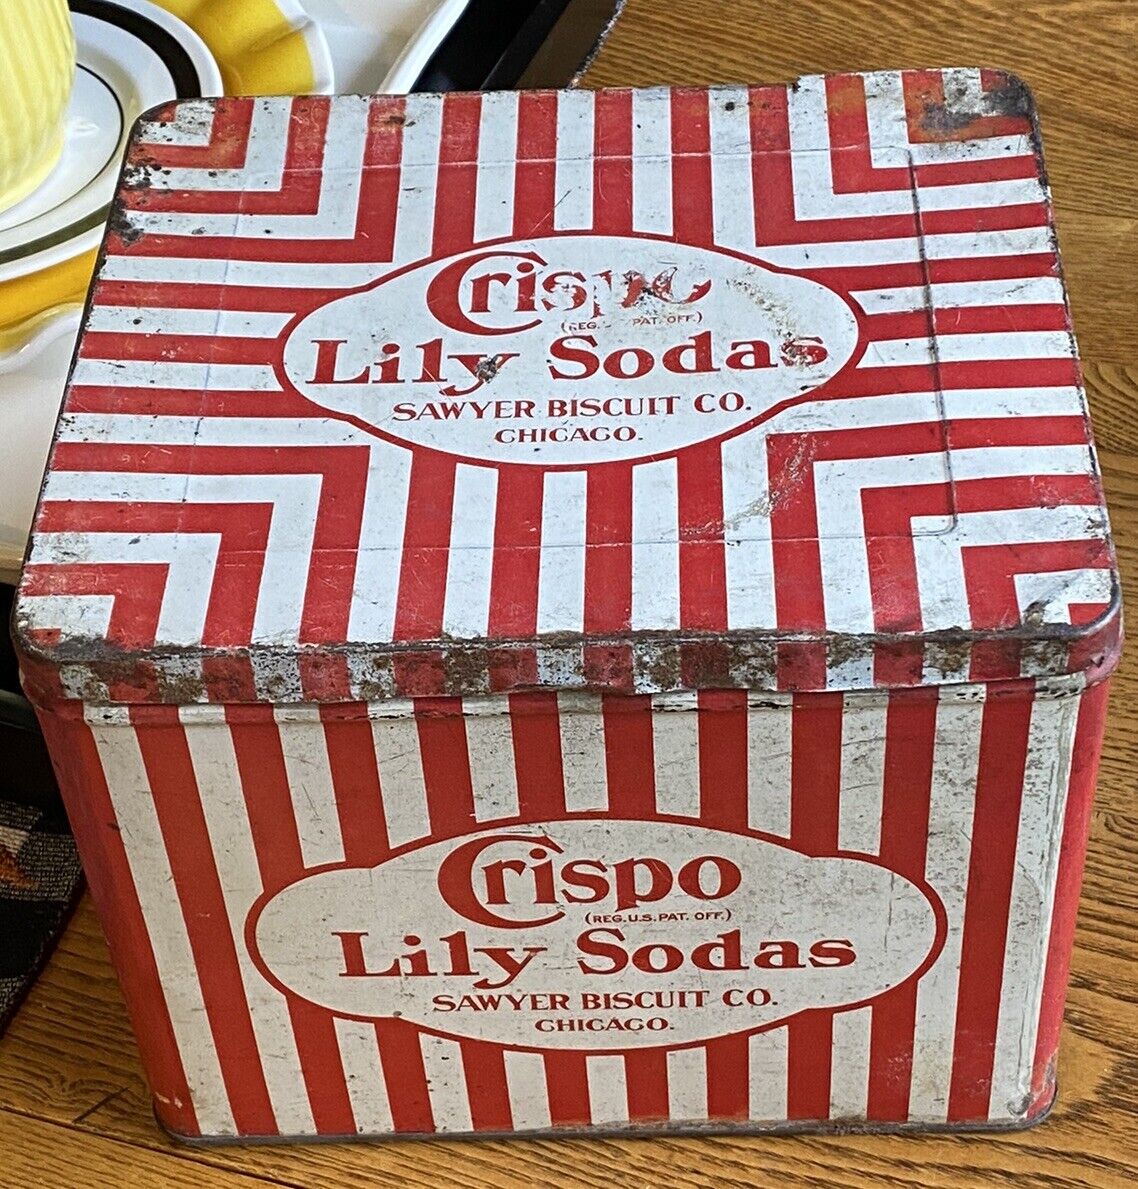 Vintage Crispo Lily Sodas Sawyer Biscuit Co. Tin Box Chicago